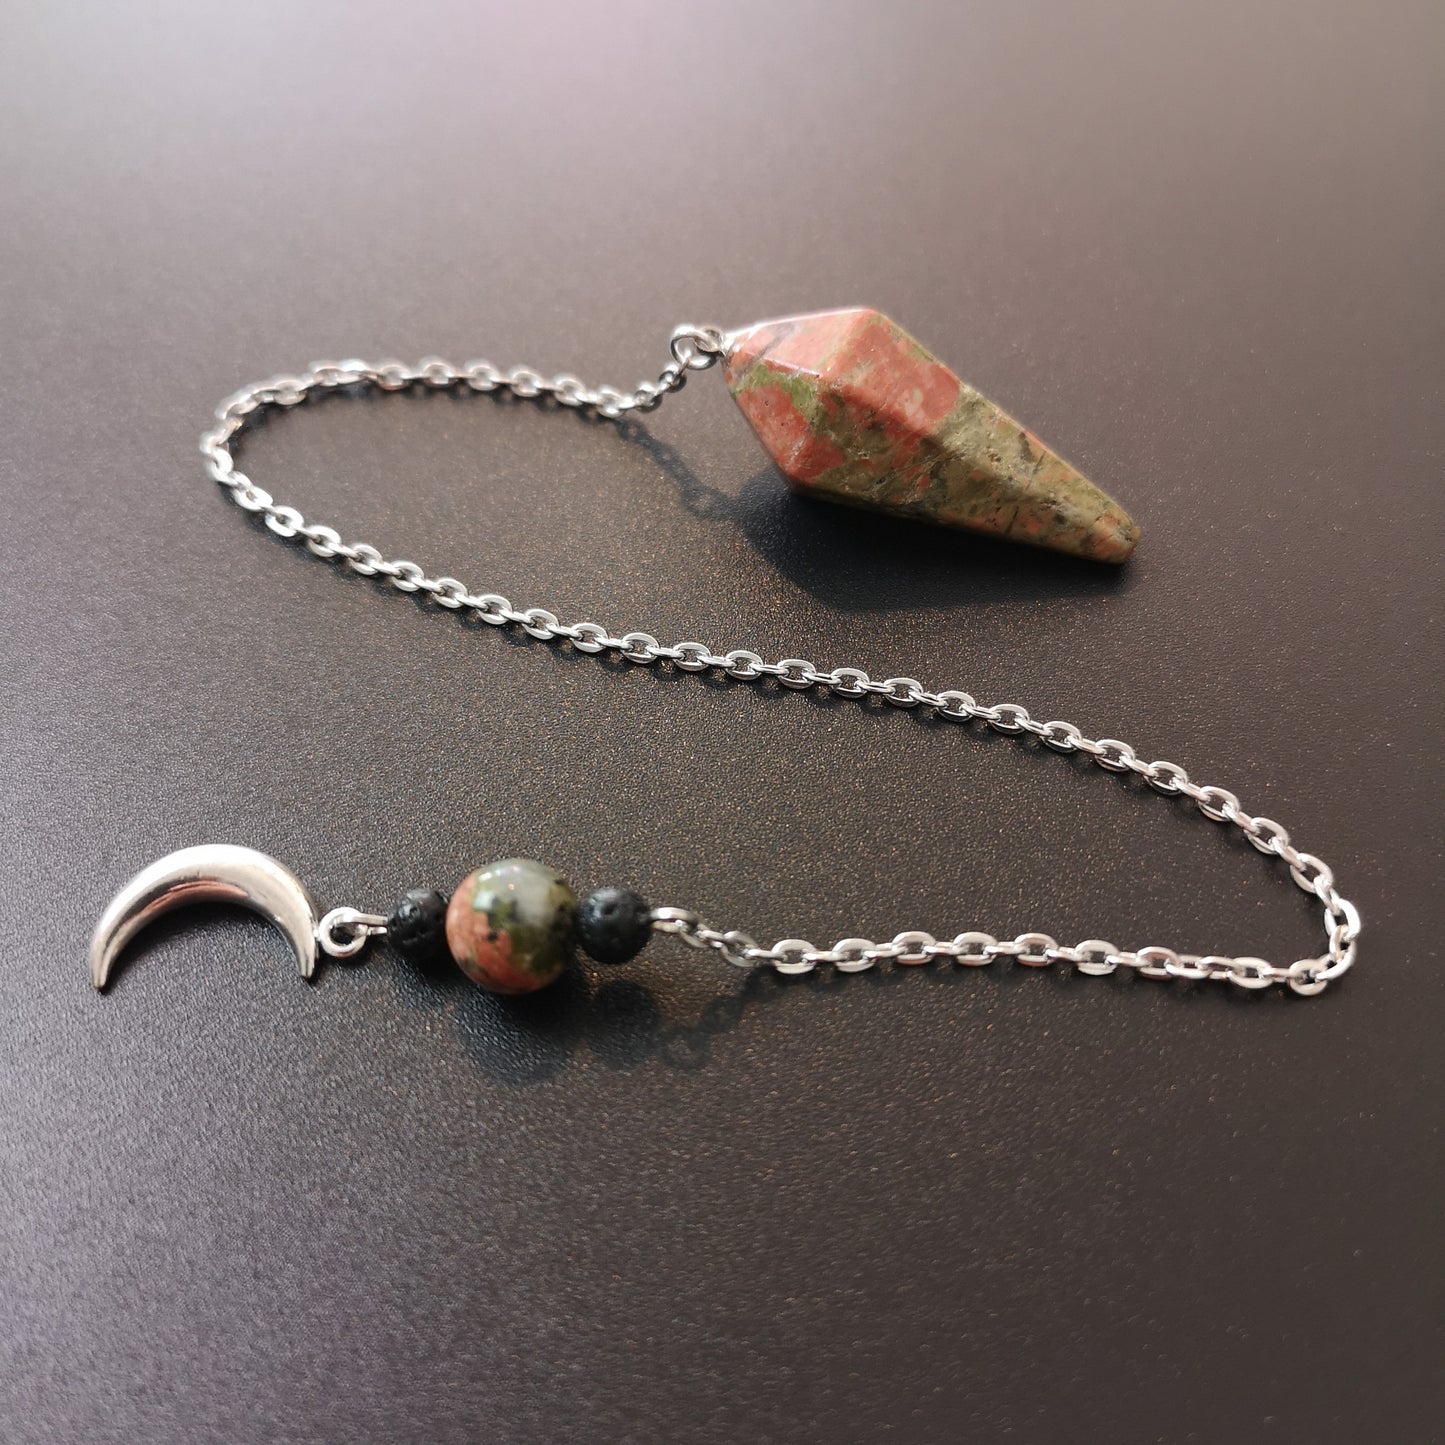 Unakite and lava rock Moon crescent pendulum Baguette Magick